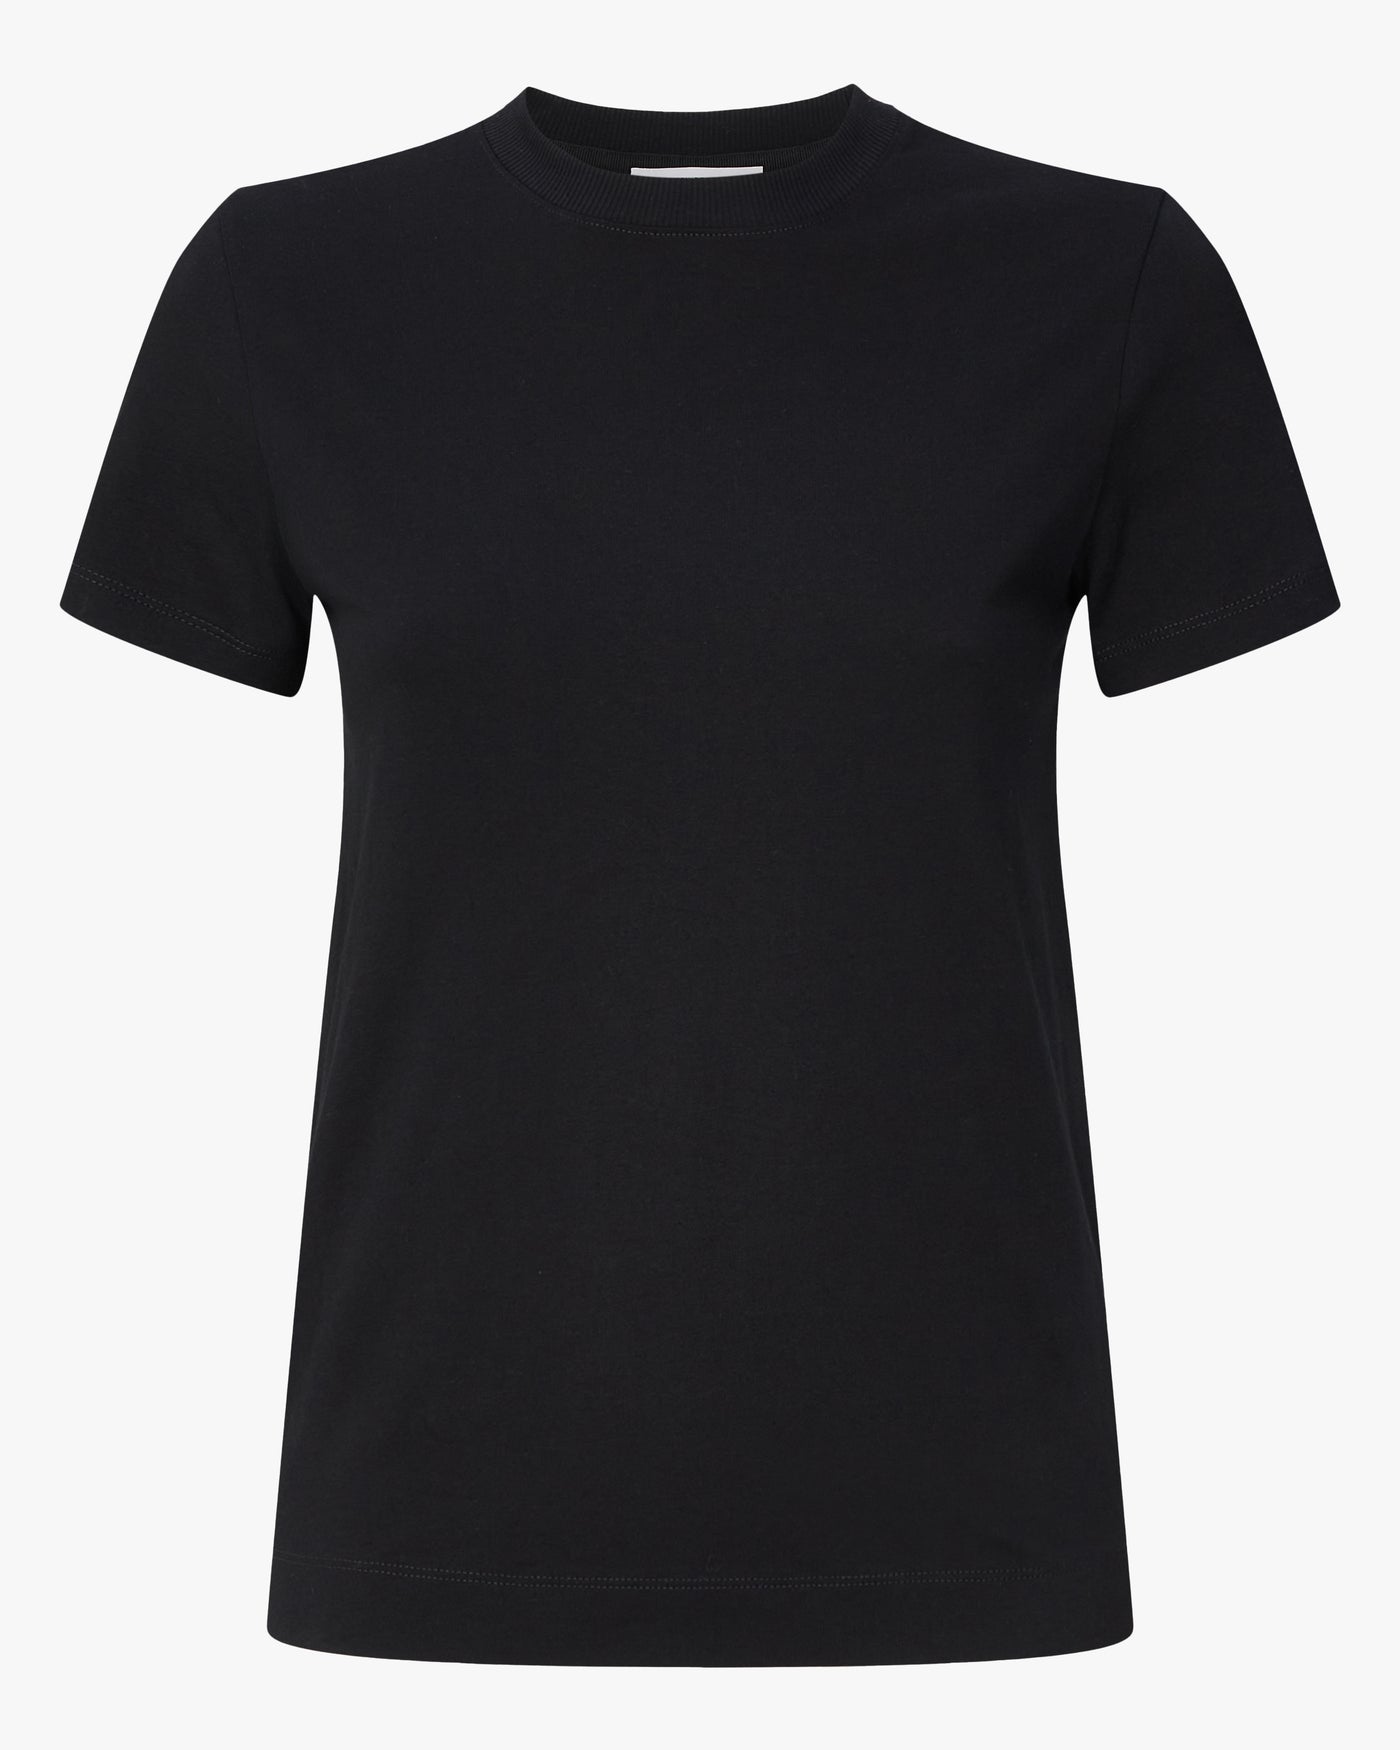 Drew T-Shirt in Black